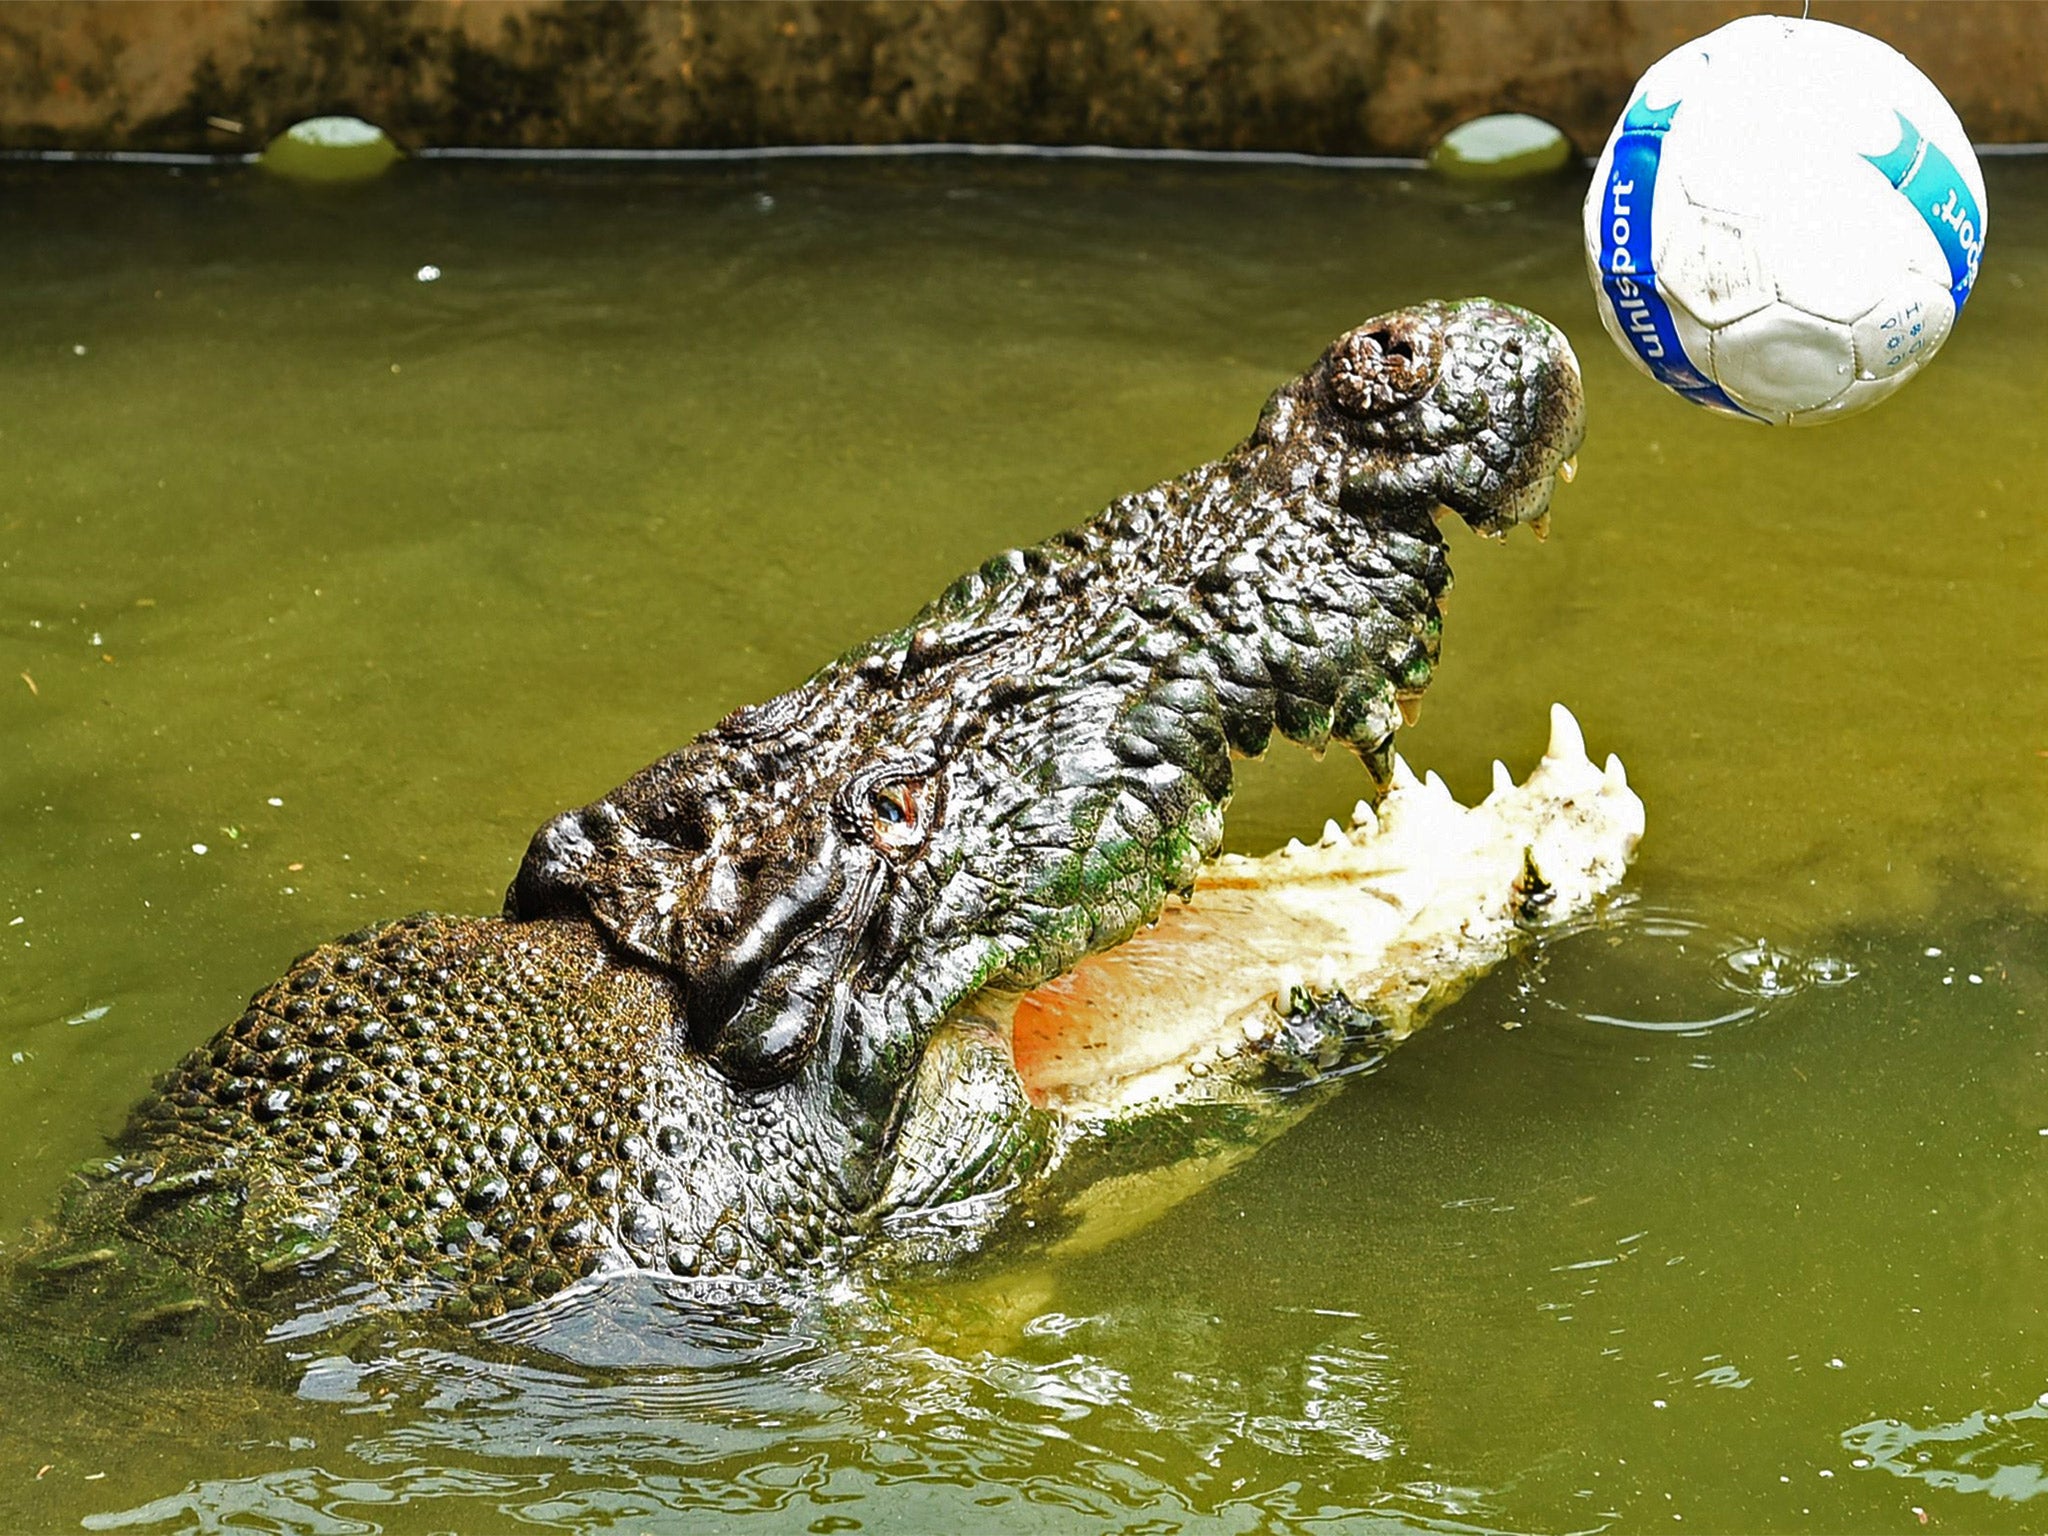 Crocodiles like to play with objects like balls